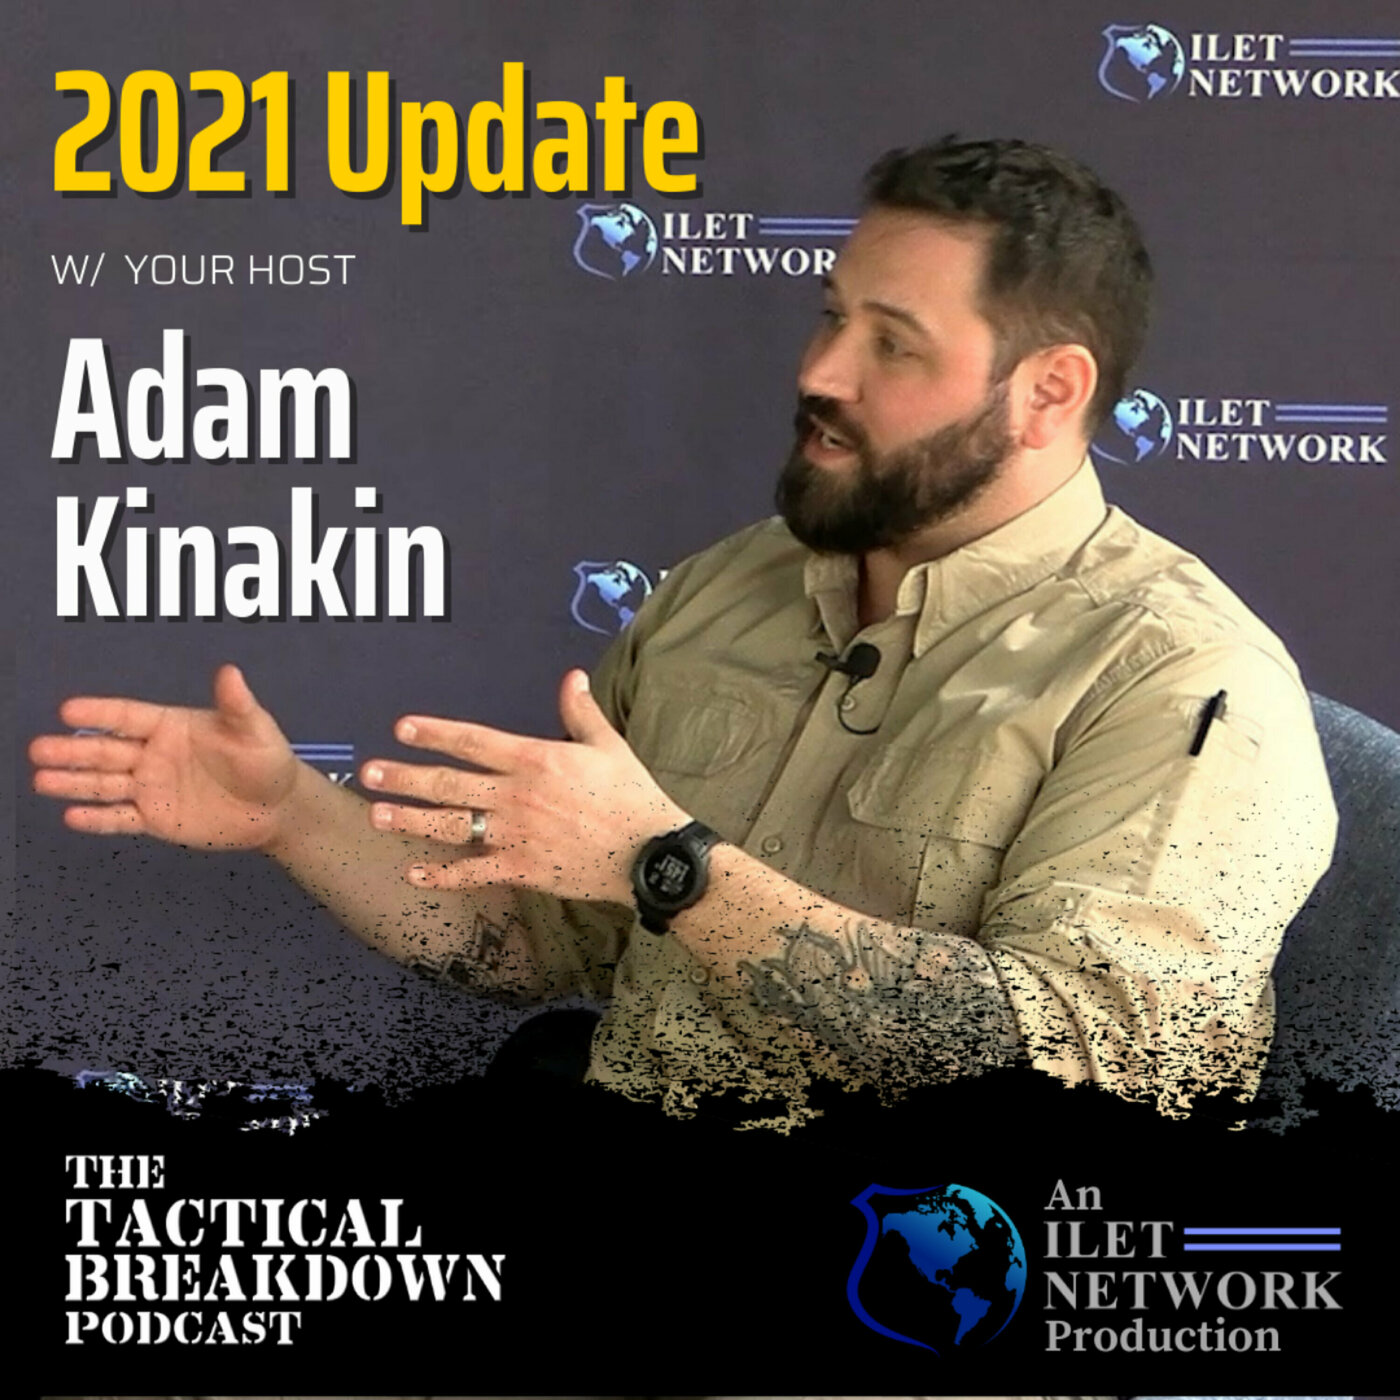 2021 Update from Adam Kinakin